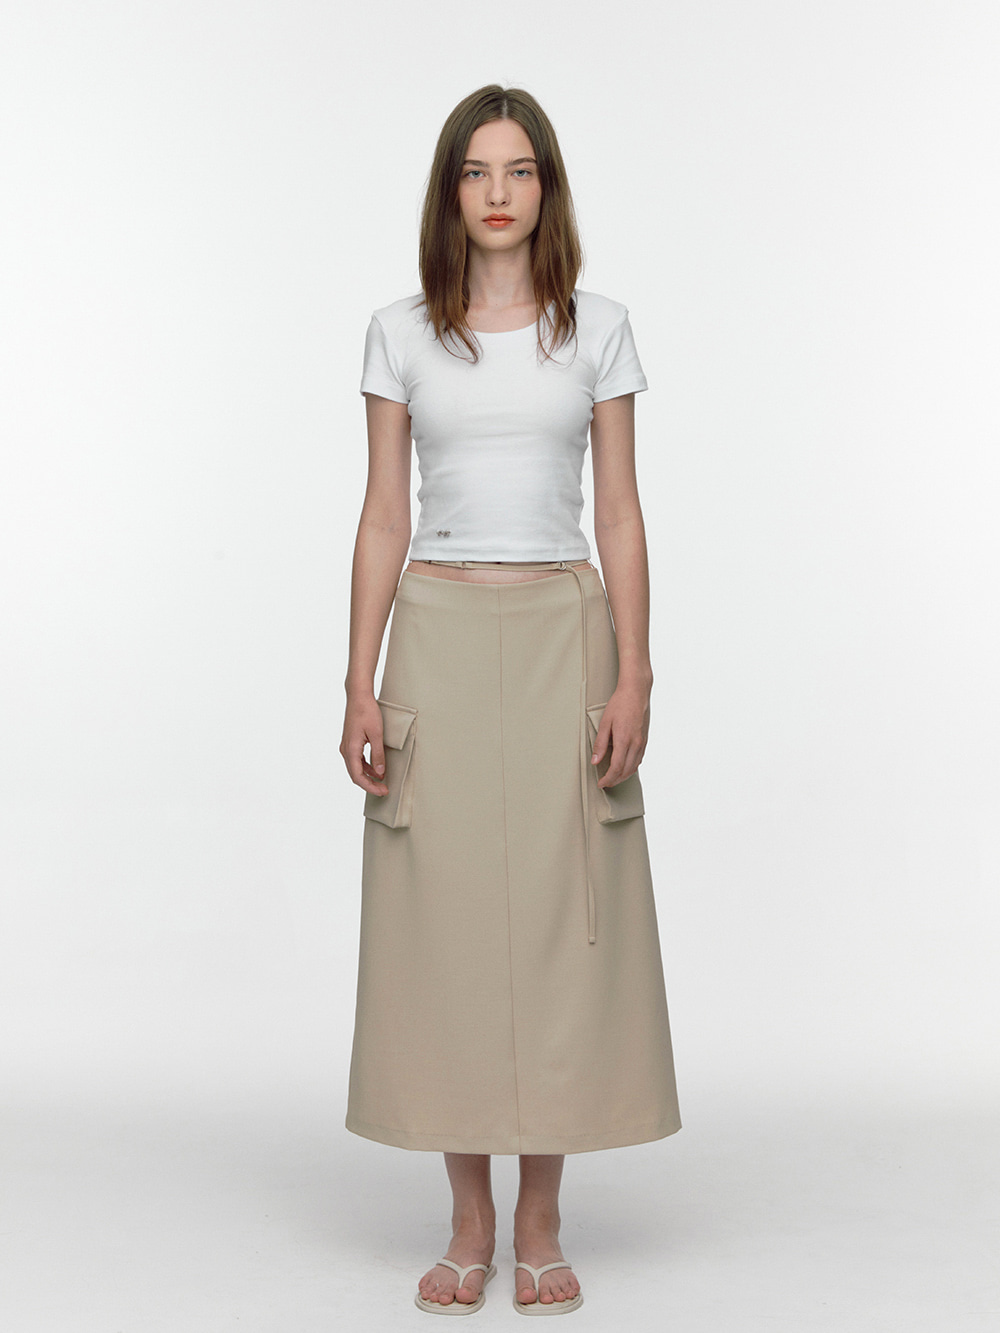 Ring Belt Low-Rise Cargo Skirt - Beige